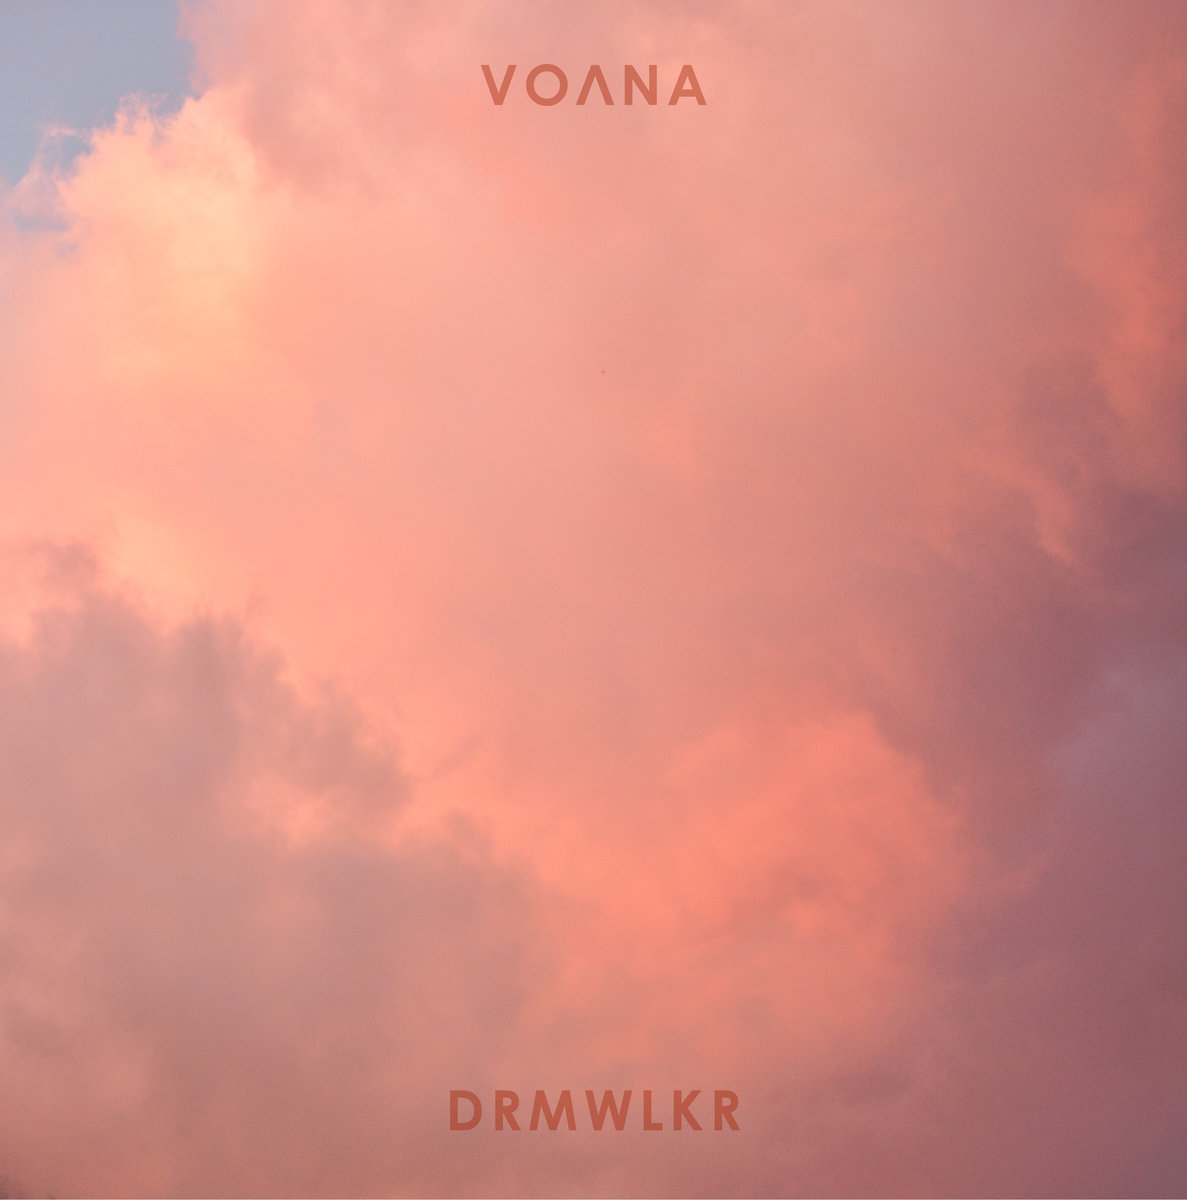 Volna - DRMWLKR (2019)